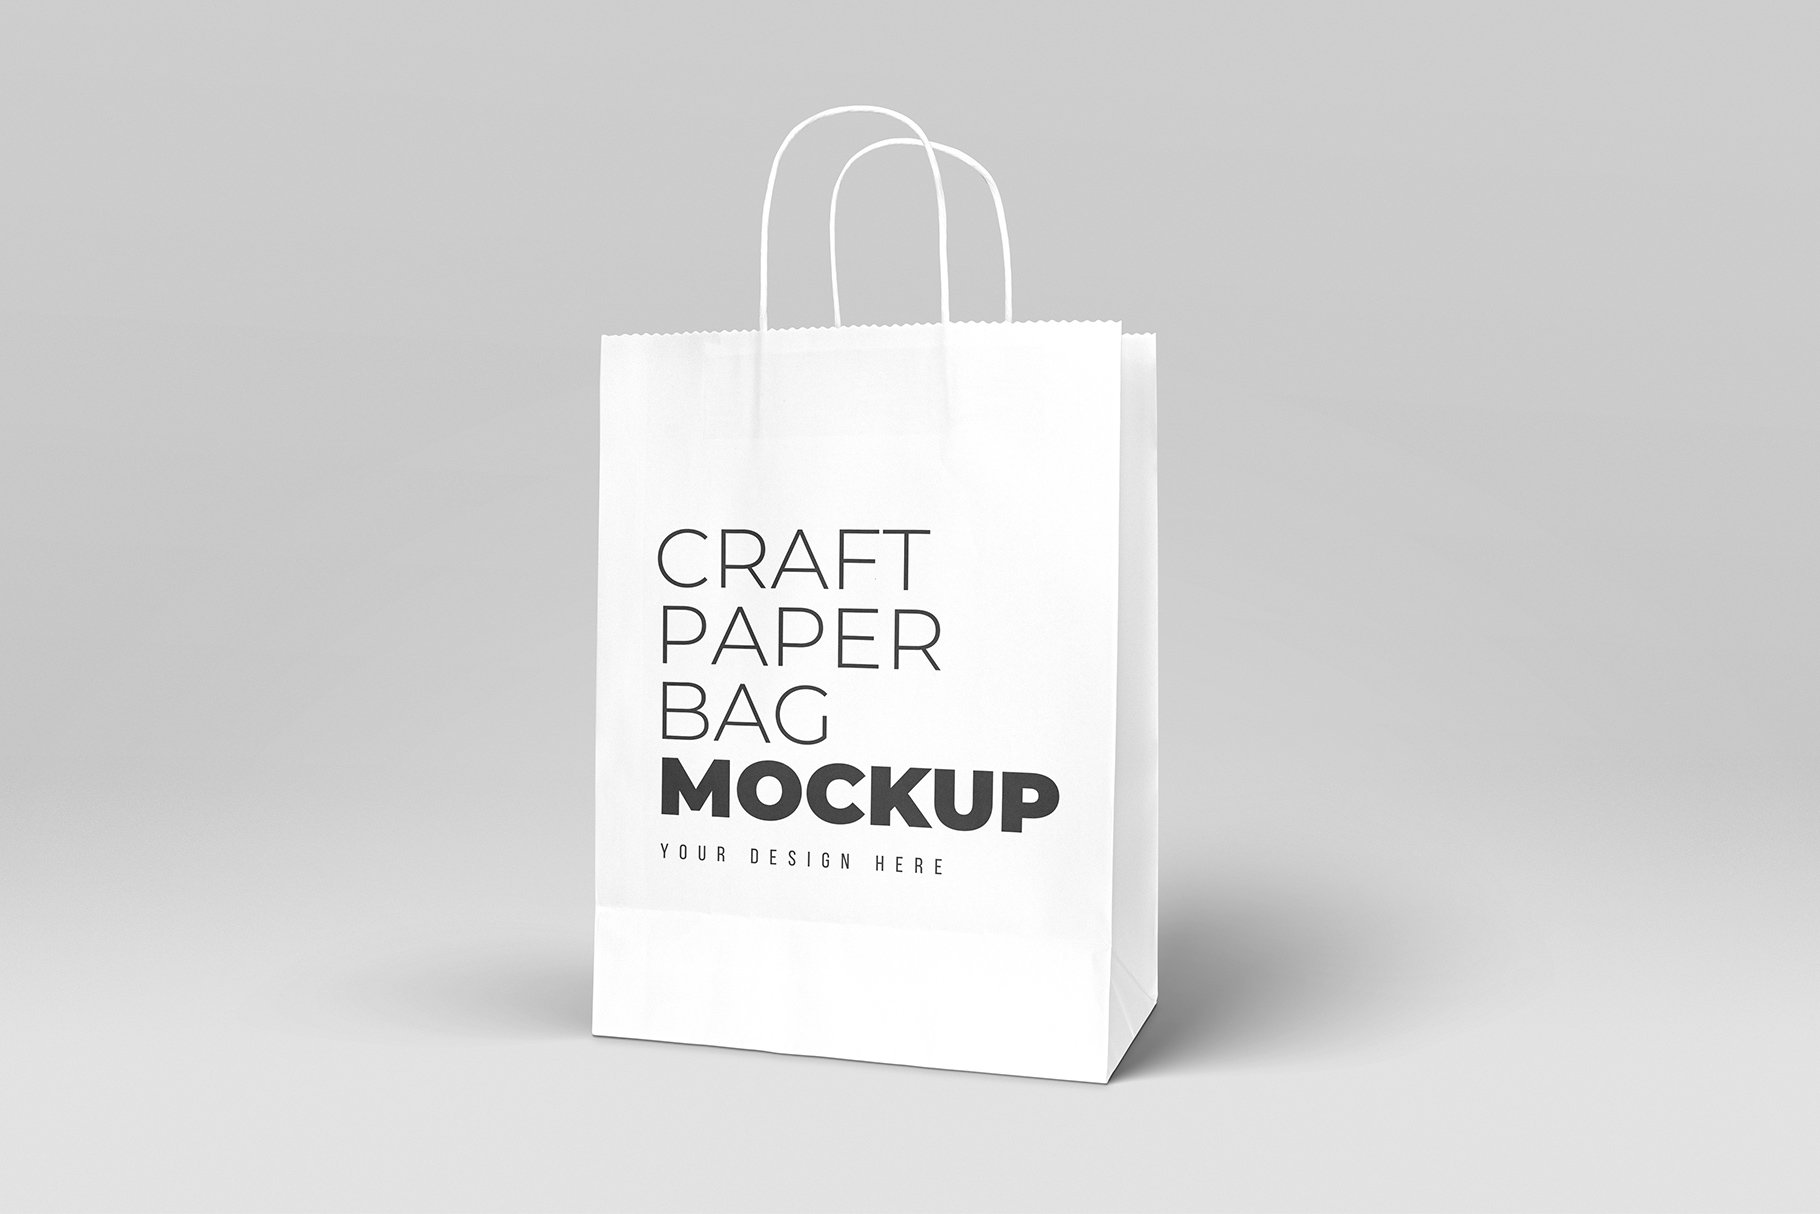 Craft Paper Bag Mockup cover image.